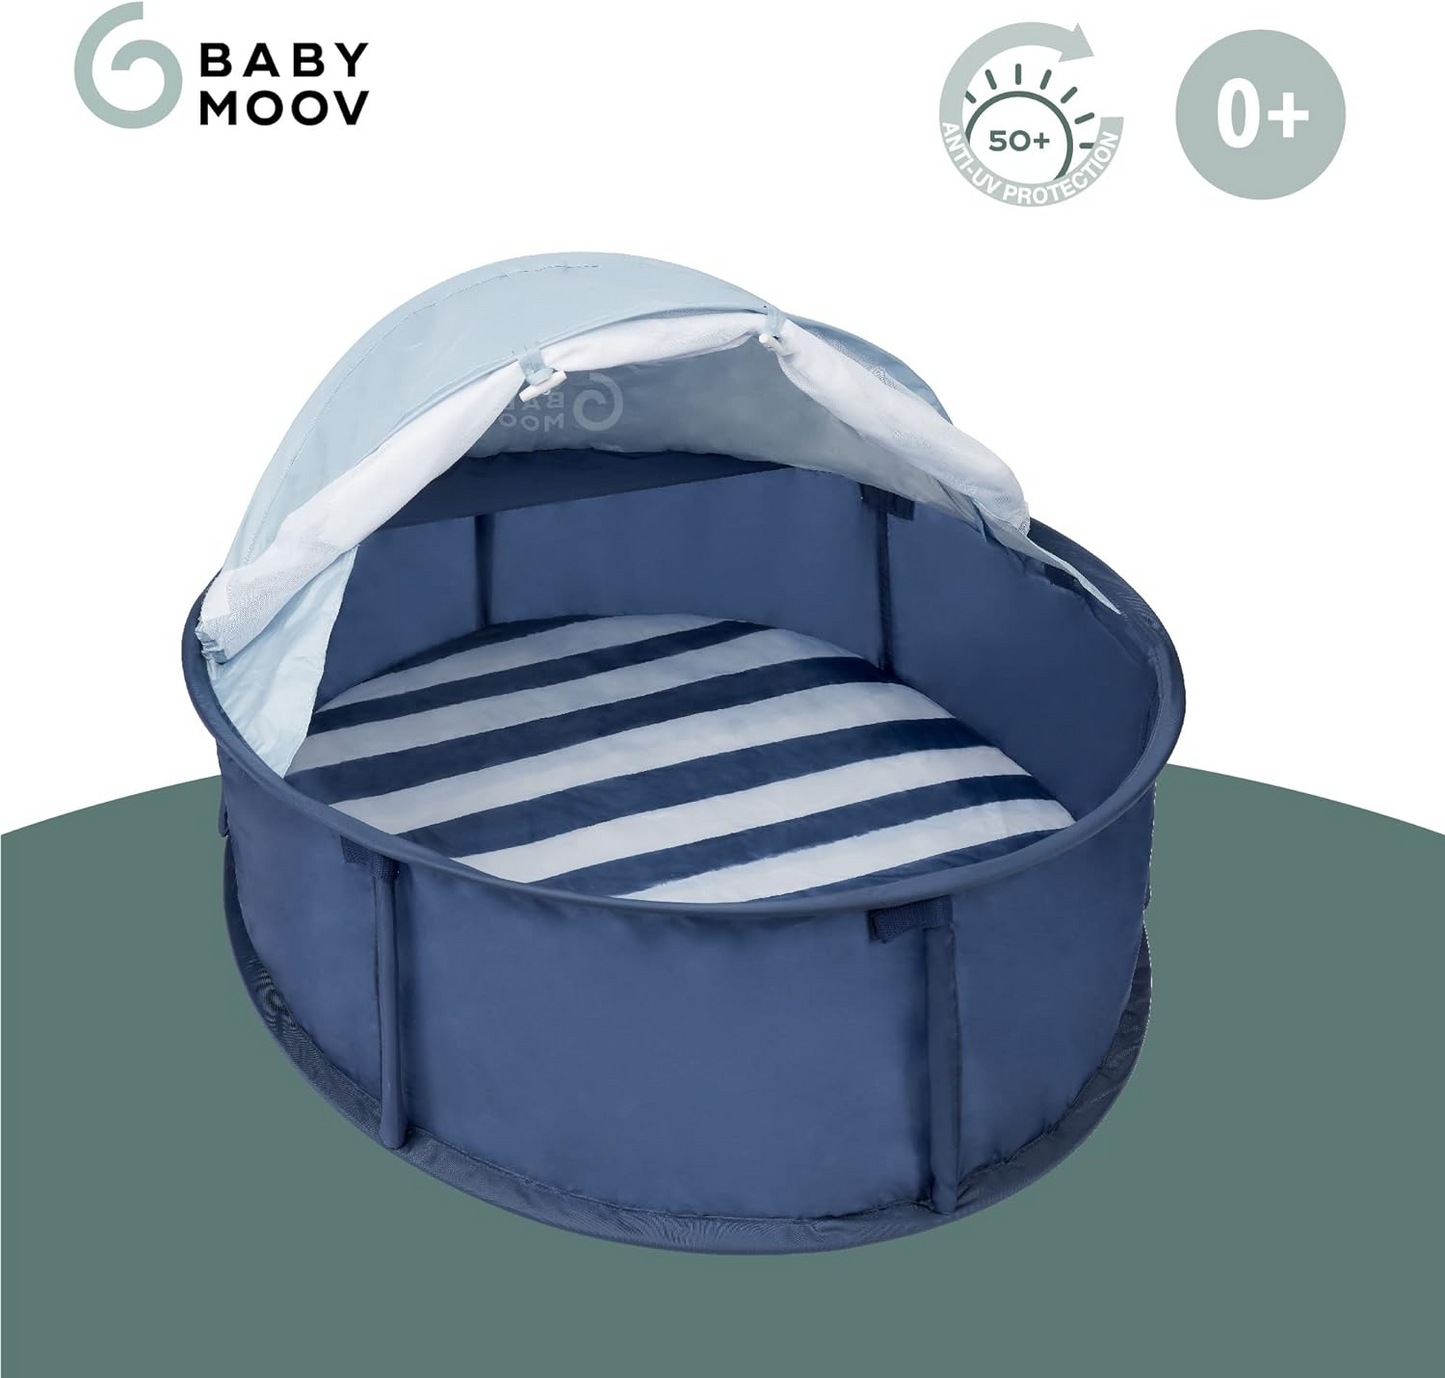 Babymoov Babyni pop up barraca de praia para bebês | Tenda anti UV | Abrigo solar, UPF 50+